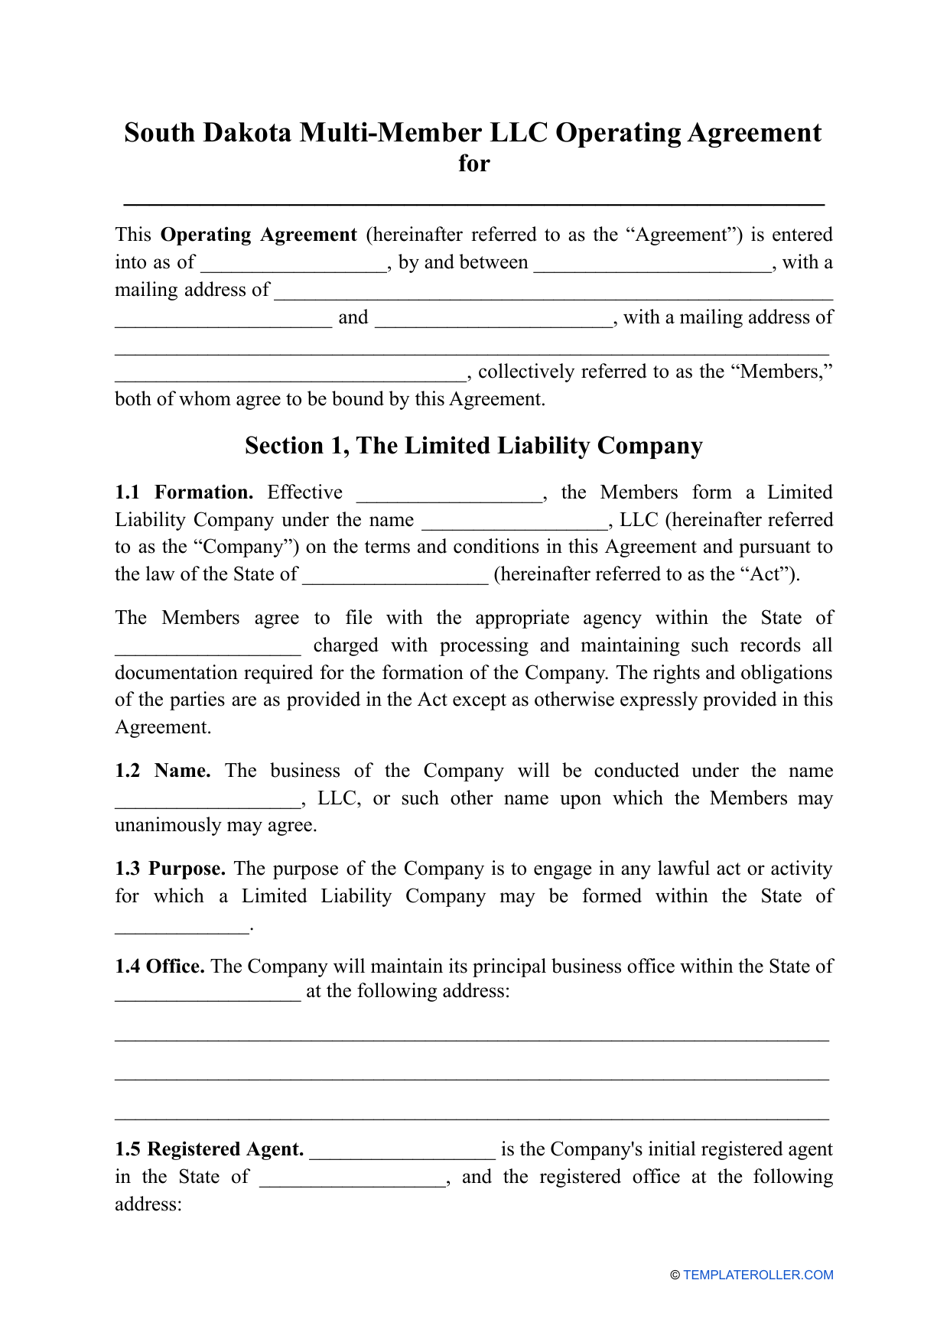 Multi-Member LLC Operating Agreement Template - South Dakota, Page 1